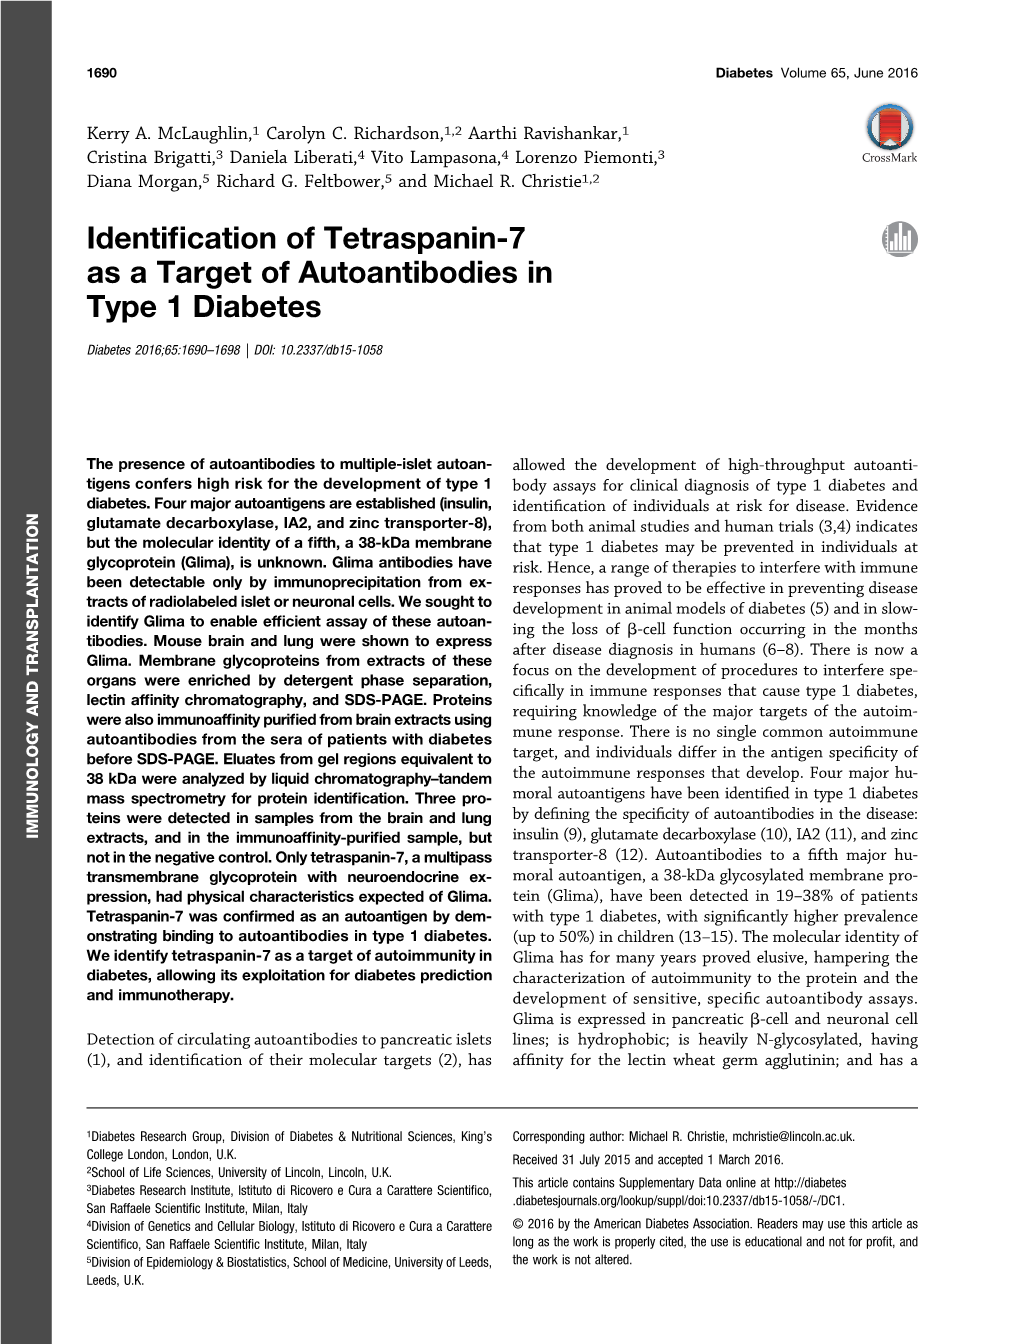 Identification of Tetraspanin-7 As a Target of Autoantibodies in Type 1